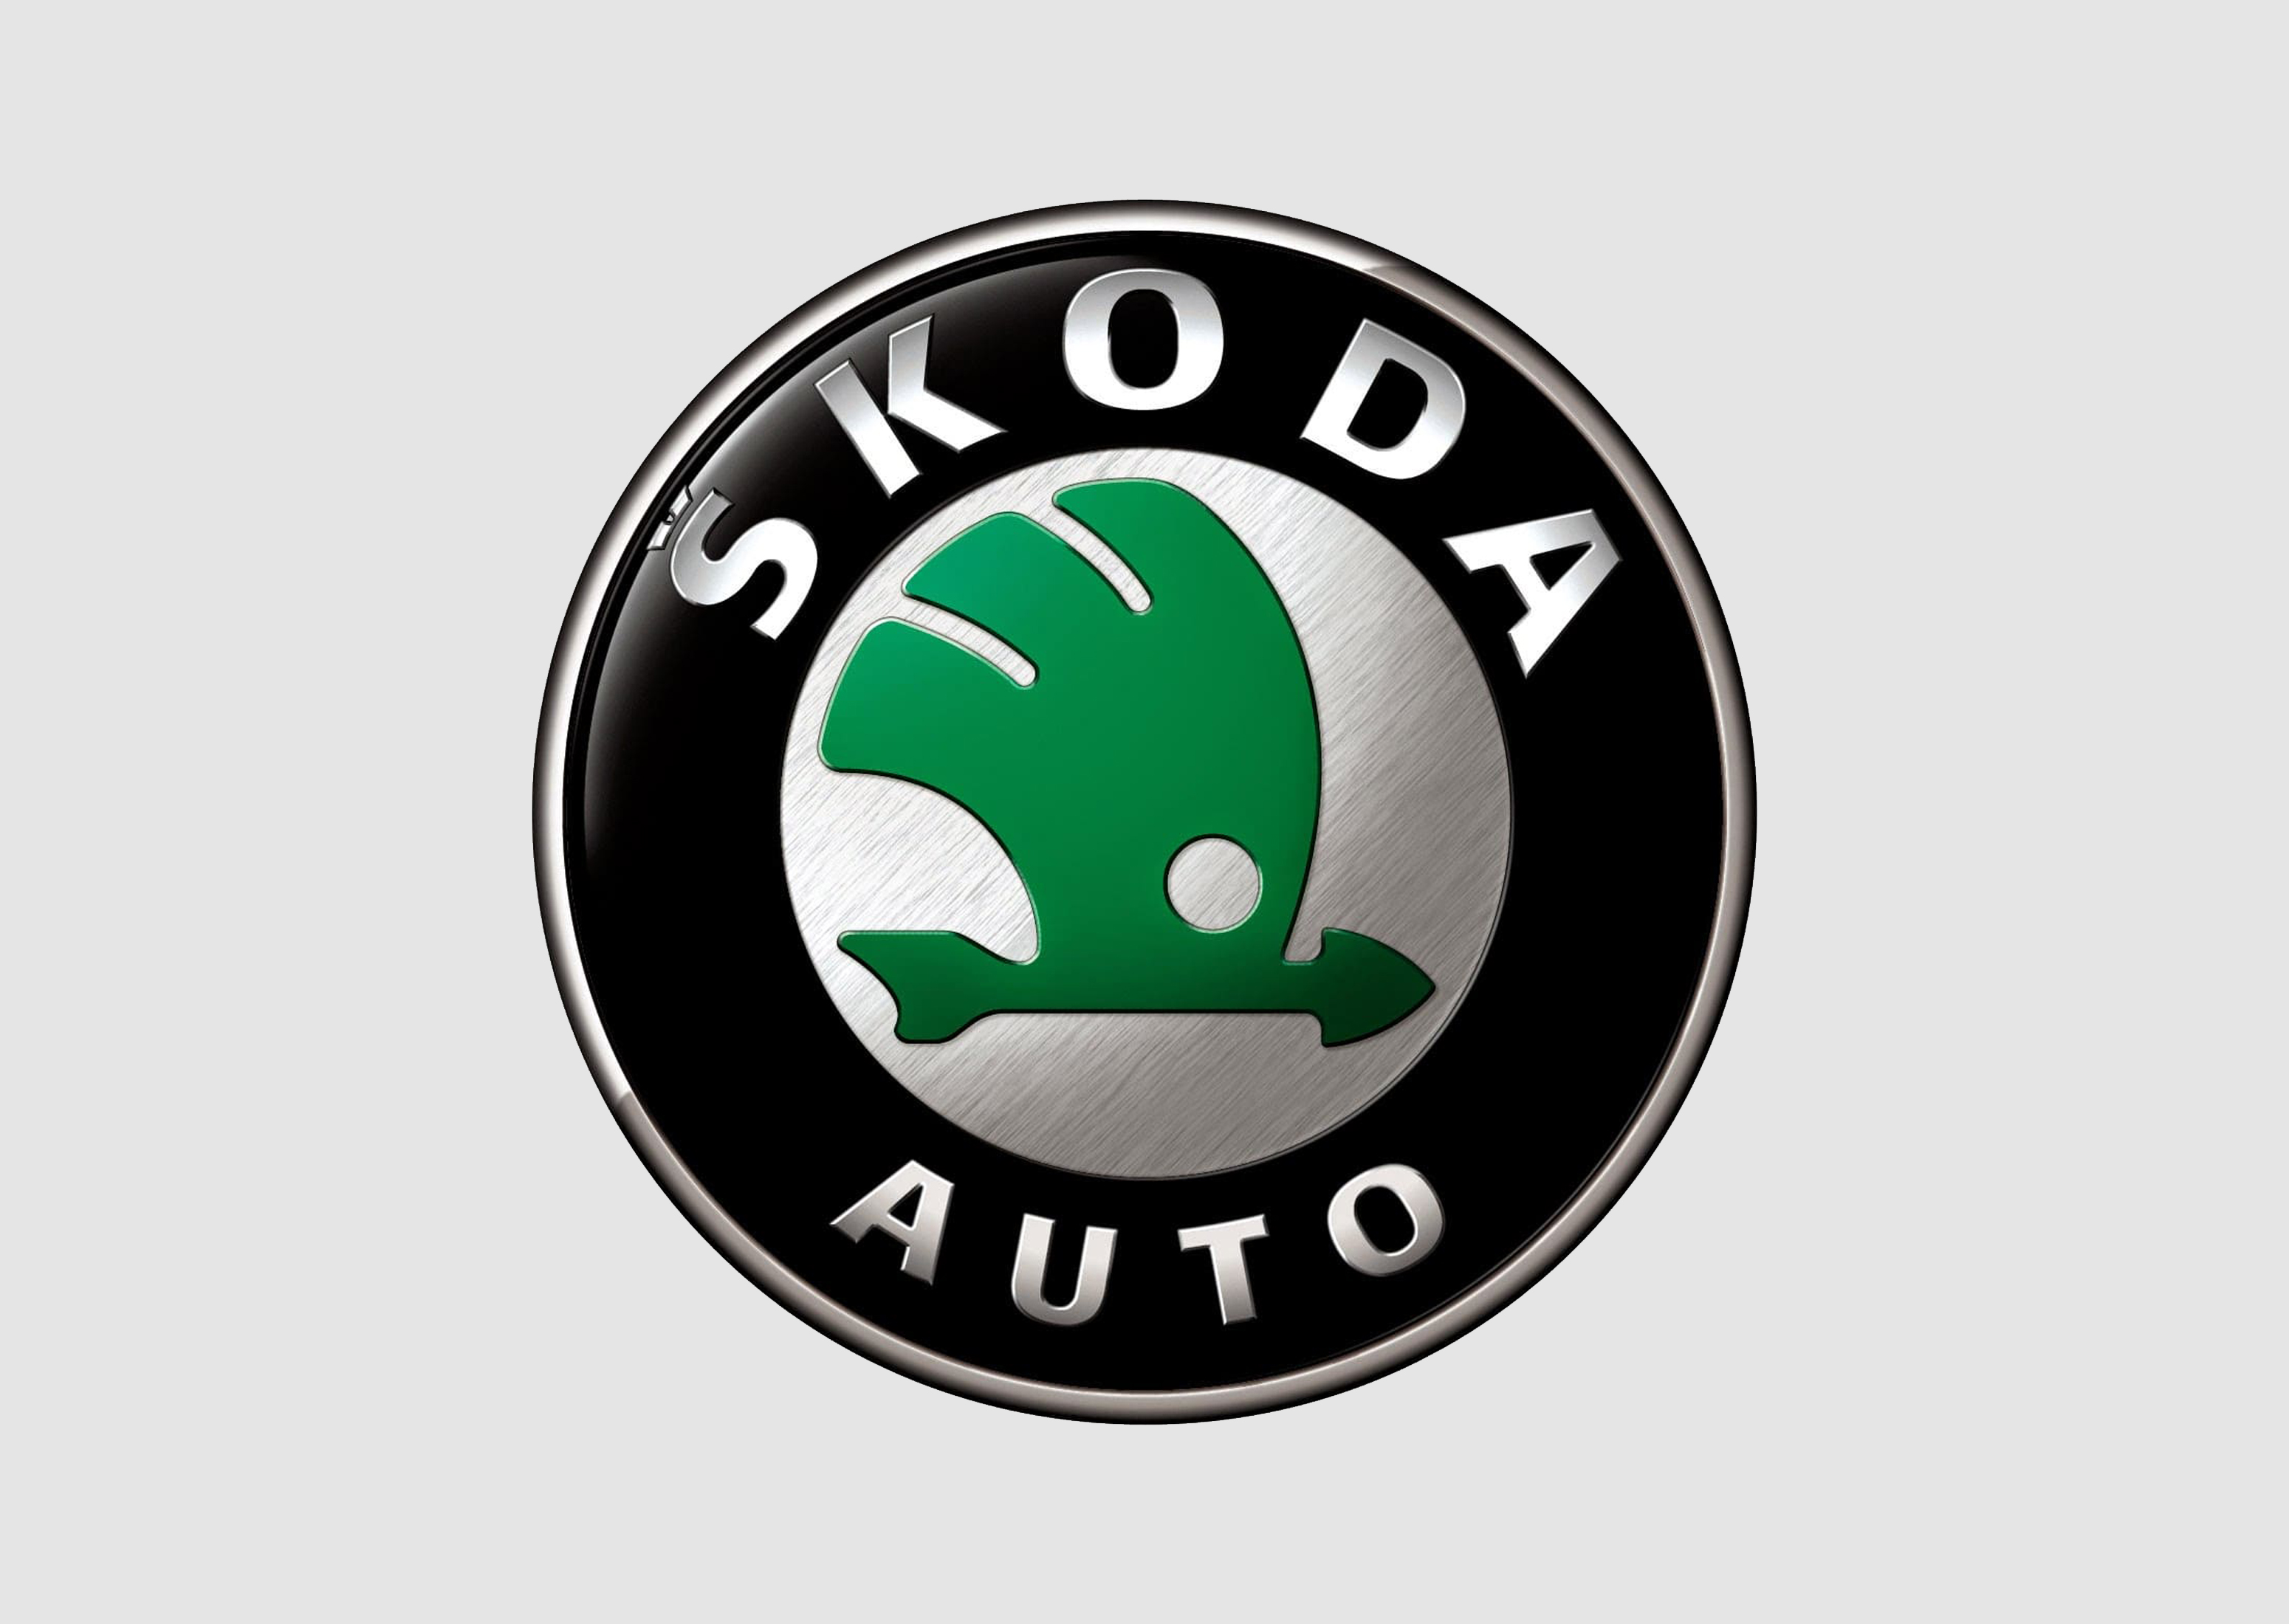 New Logo for Škoda - BP&O